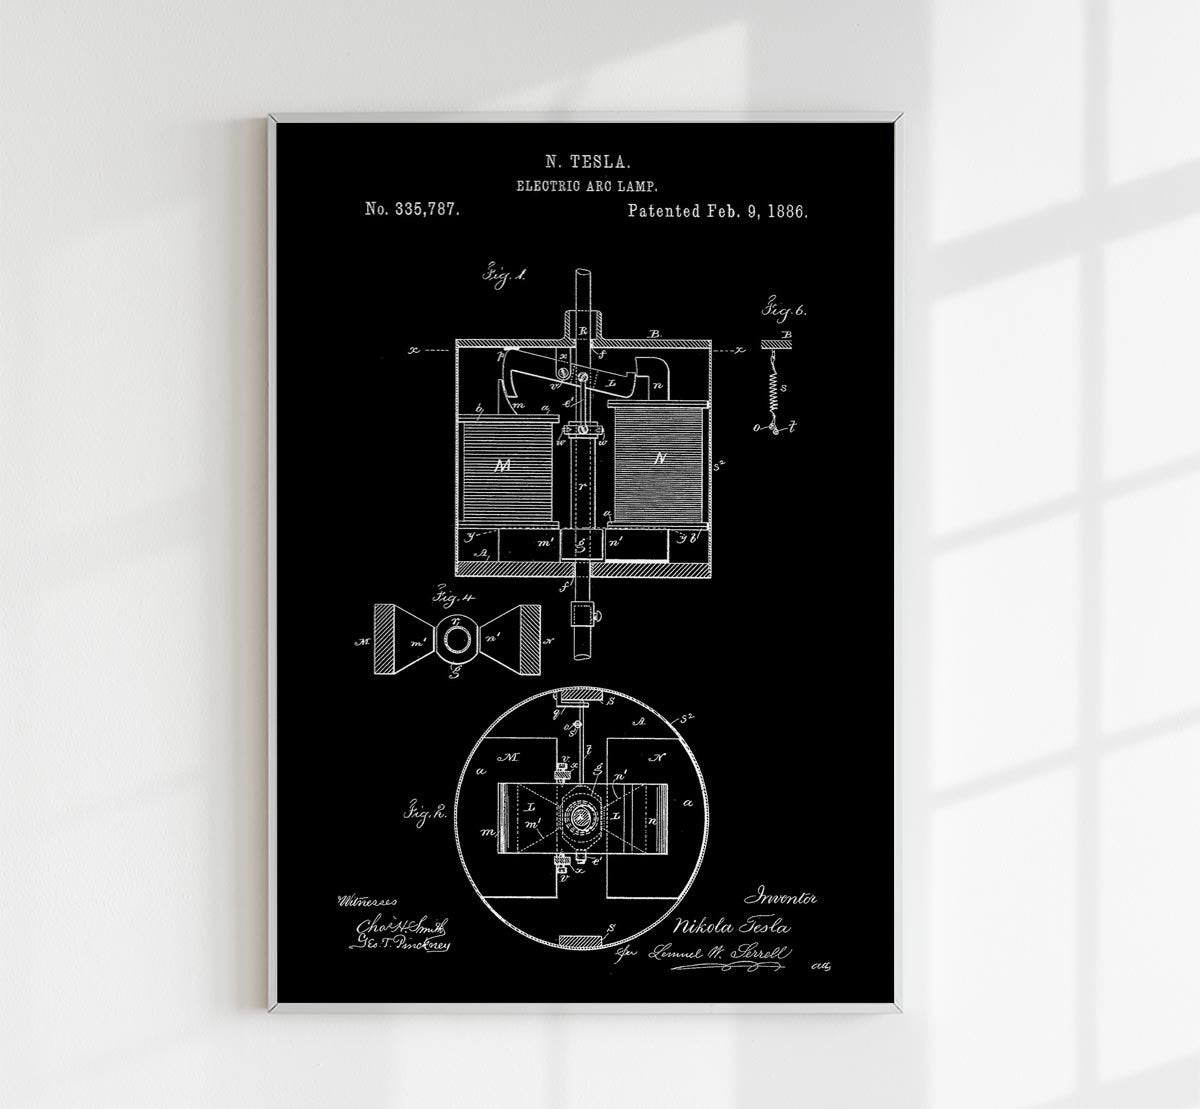 Tesla's Electric Arc Lamp Patent Poster